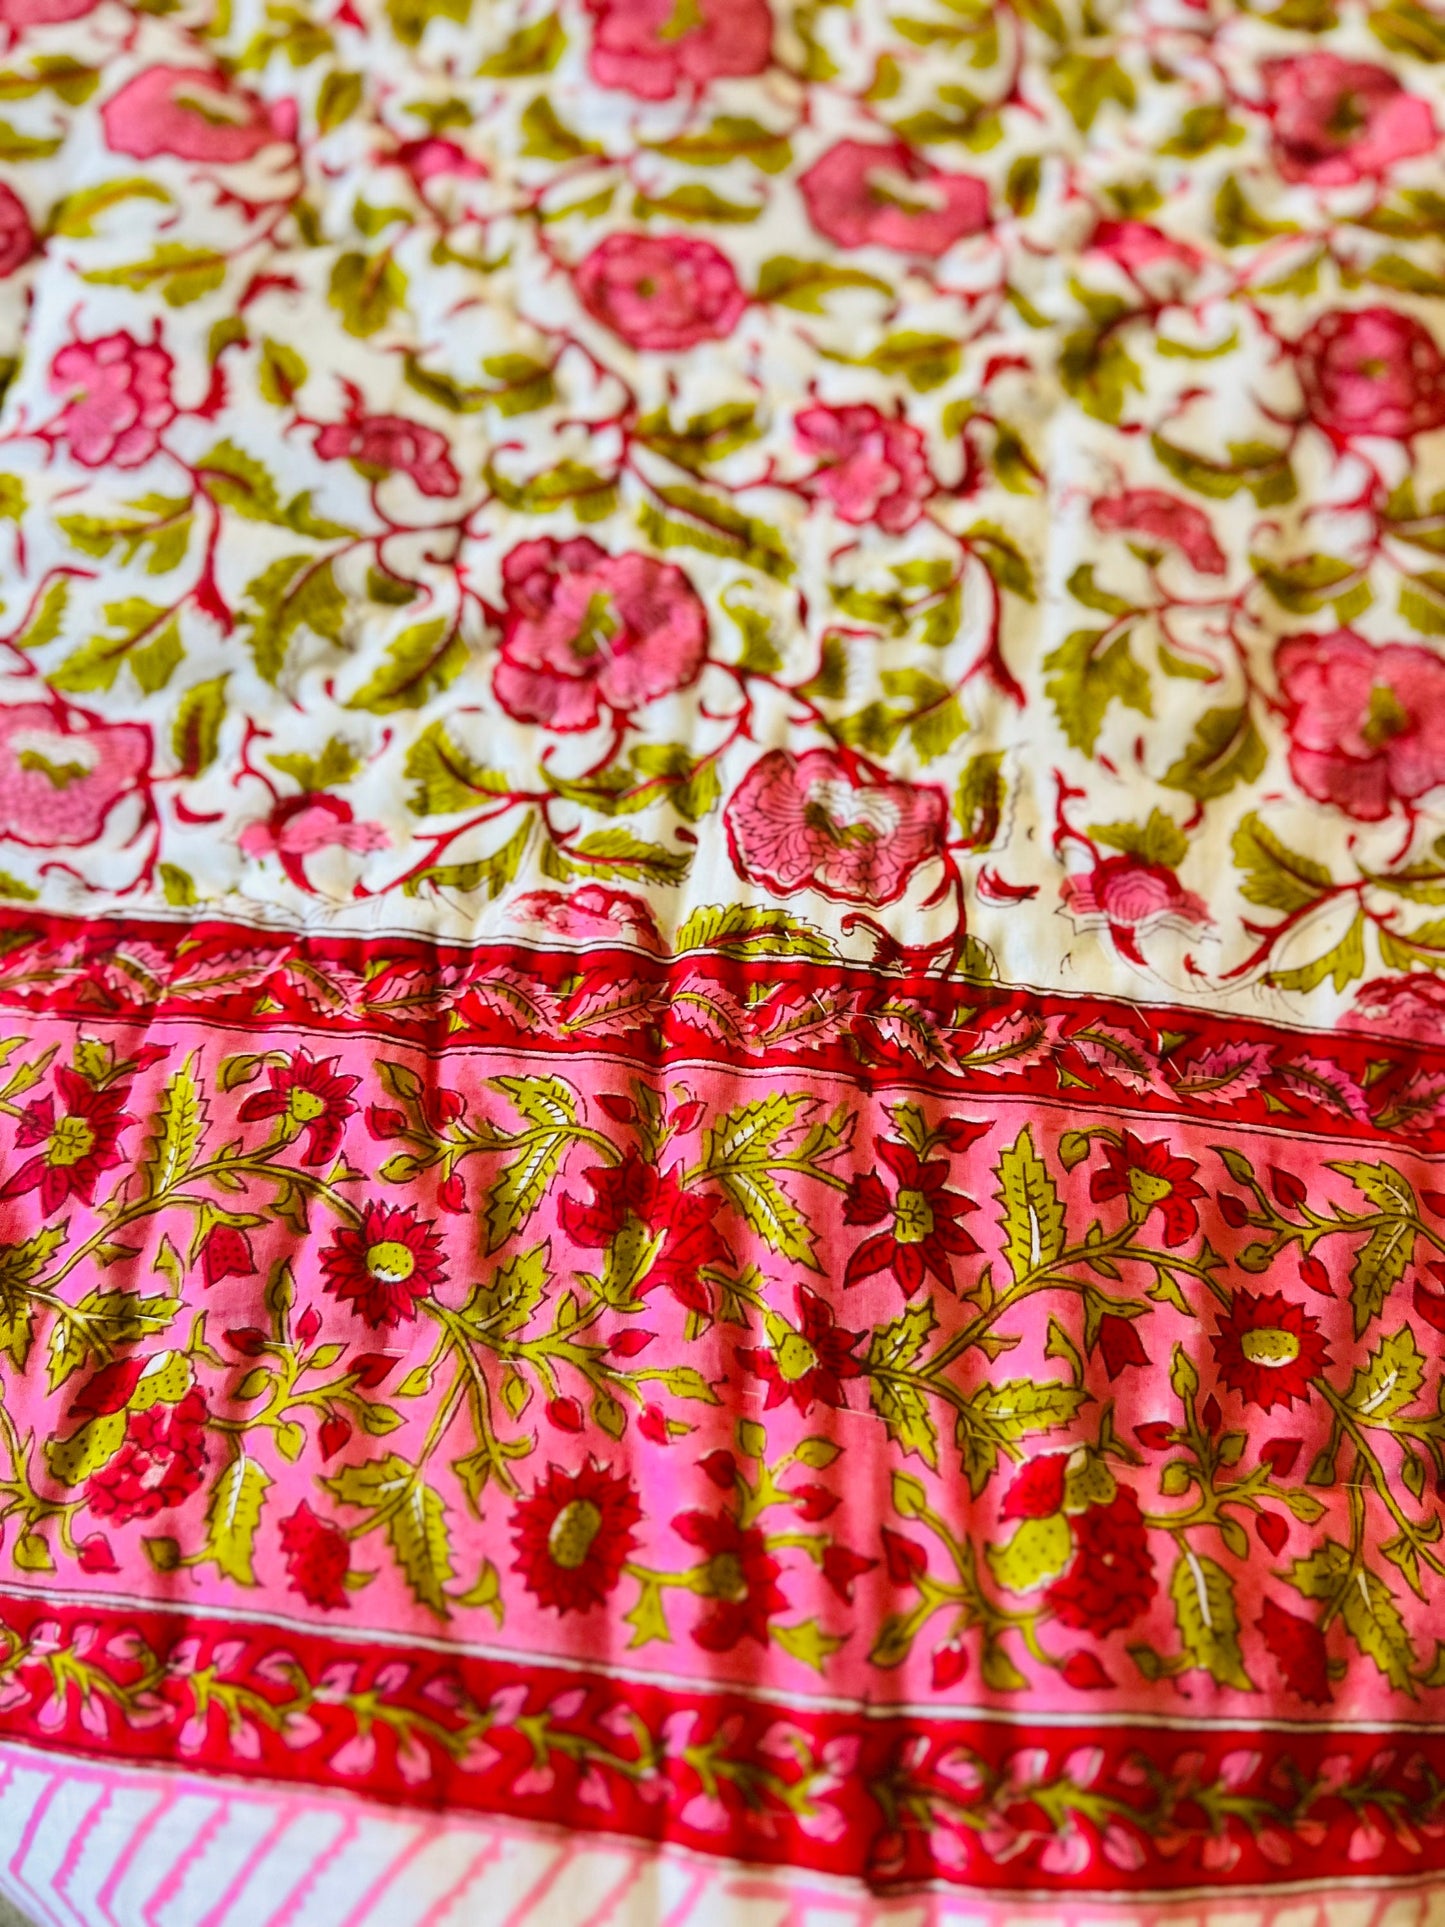 Reversible Handmade Block Print Floral 100% Cotton Quilted Blanket, Jaipur Razai, Light Weight Winter Blanket, Queen size, 90x108 inch